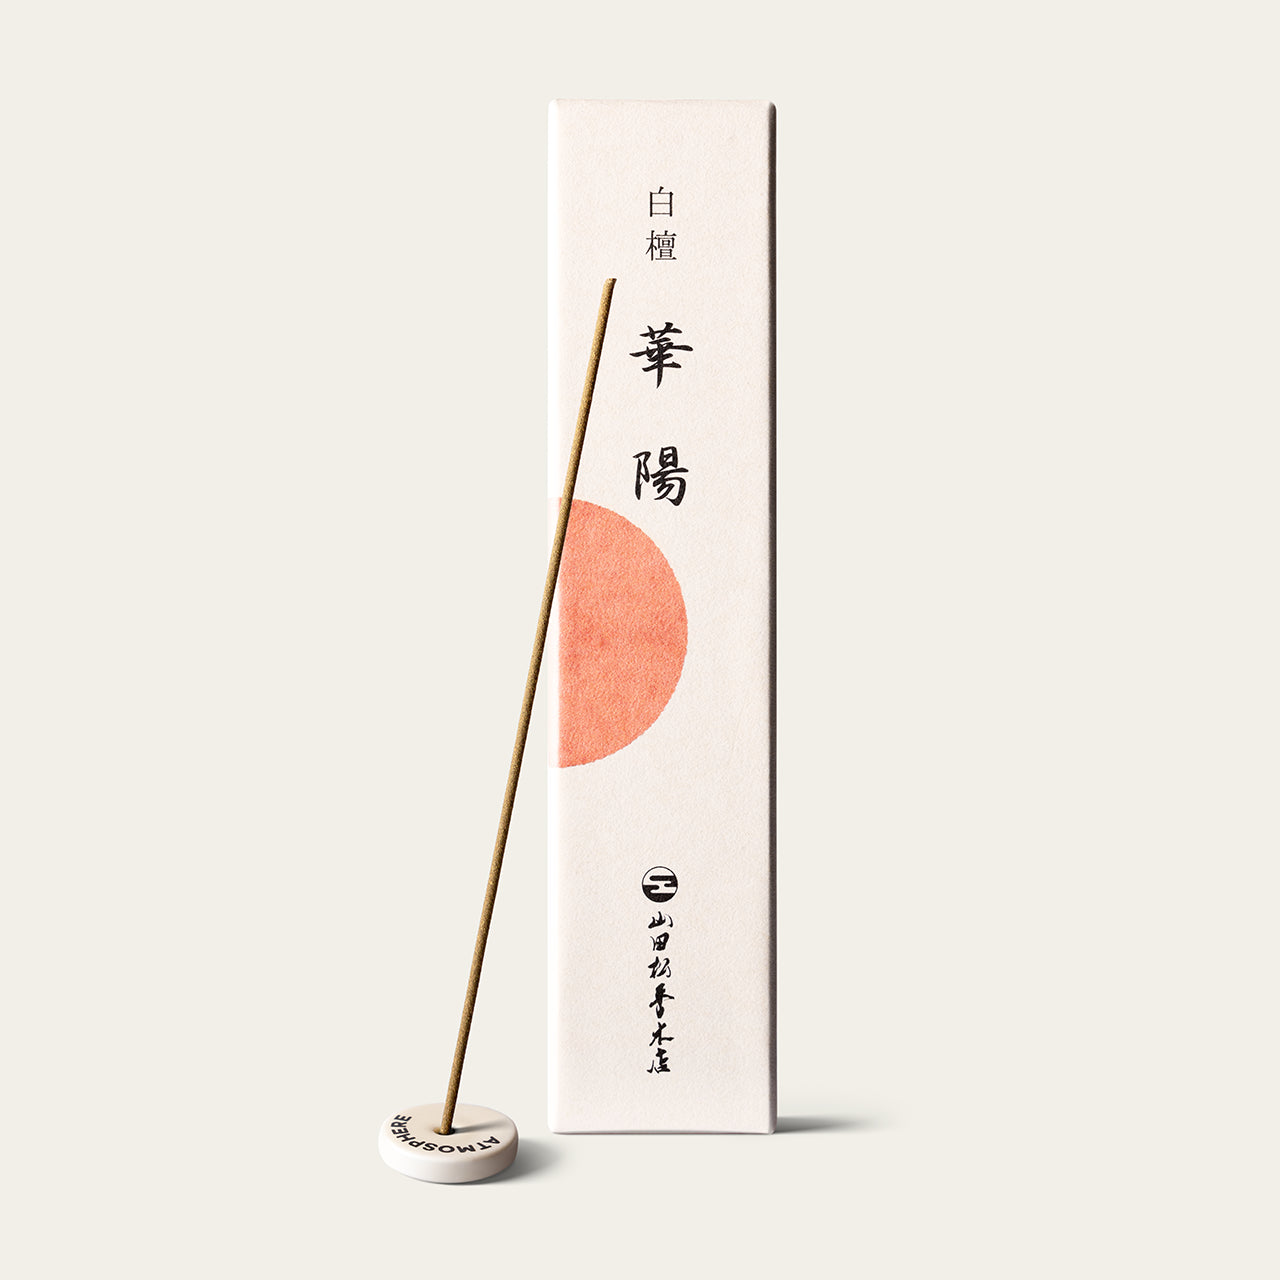 Yamadamatsu Premium Sun Bloom Kayo Japanese incense sticks (75 sticks) with Atmosphere ceramic incense holder